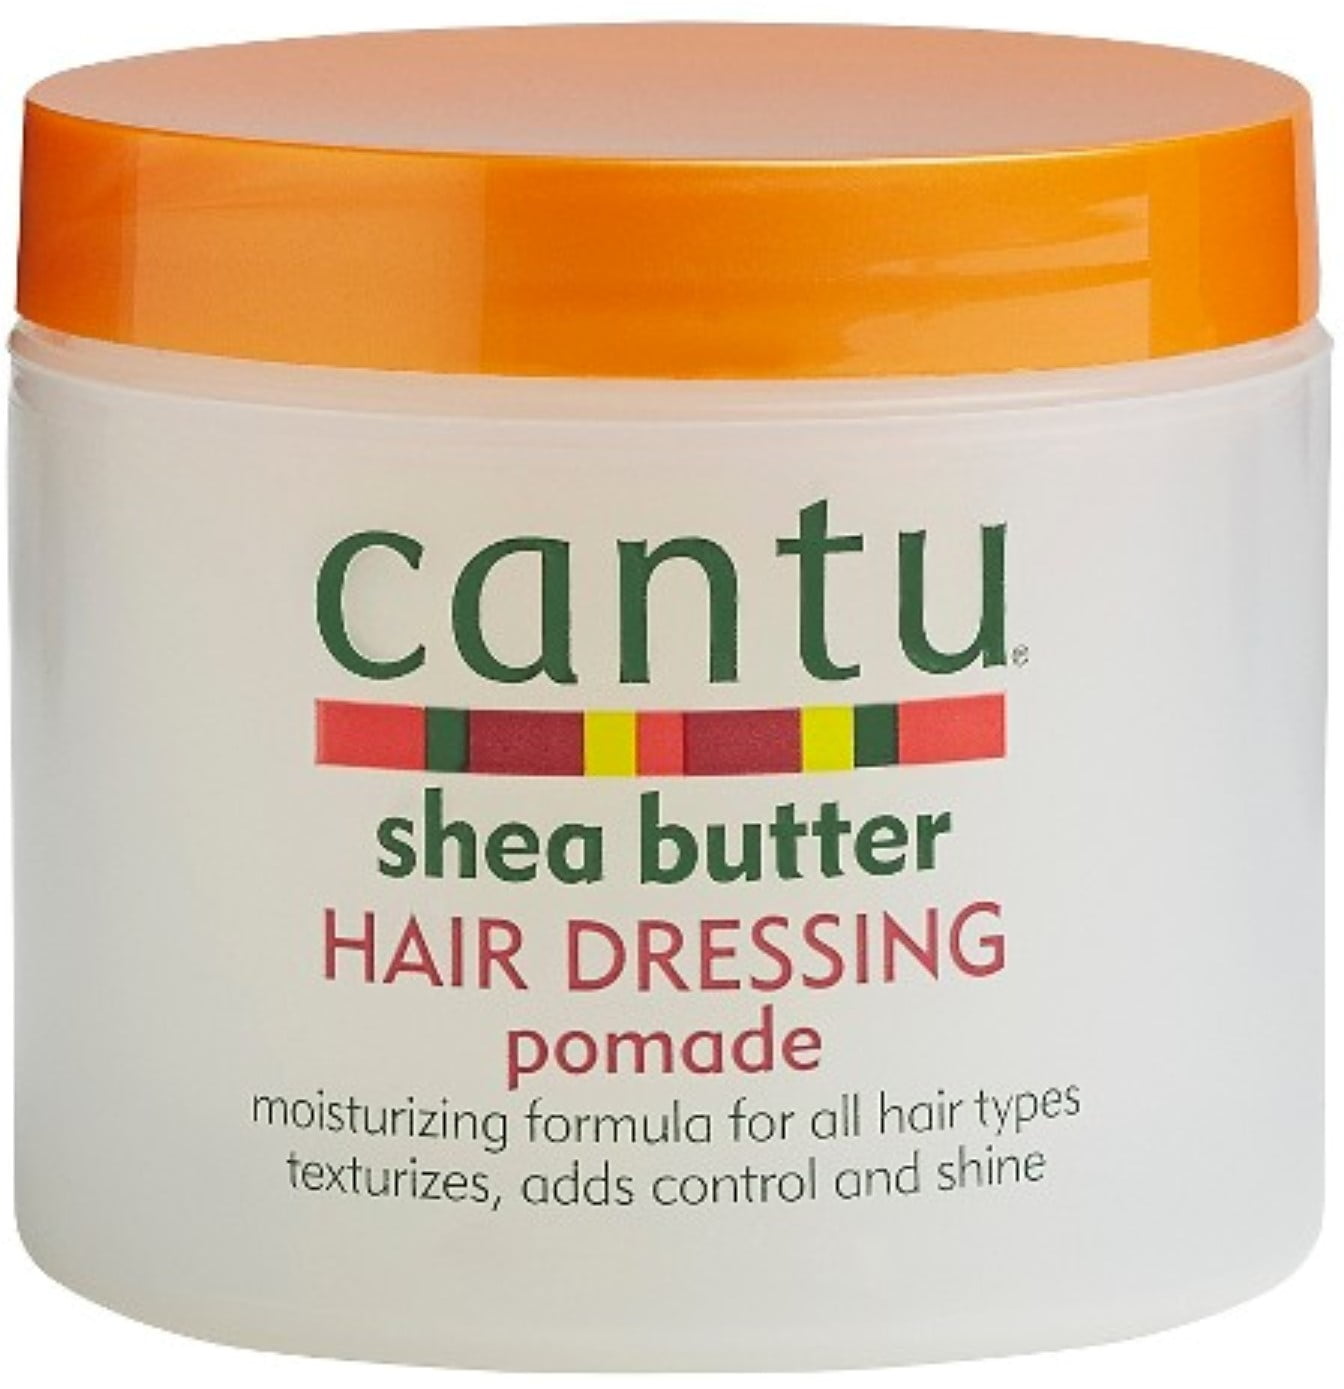 Cantu Shea Butter Hair Dressing Pomade, 4 oz (Pack of 2)